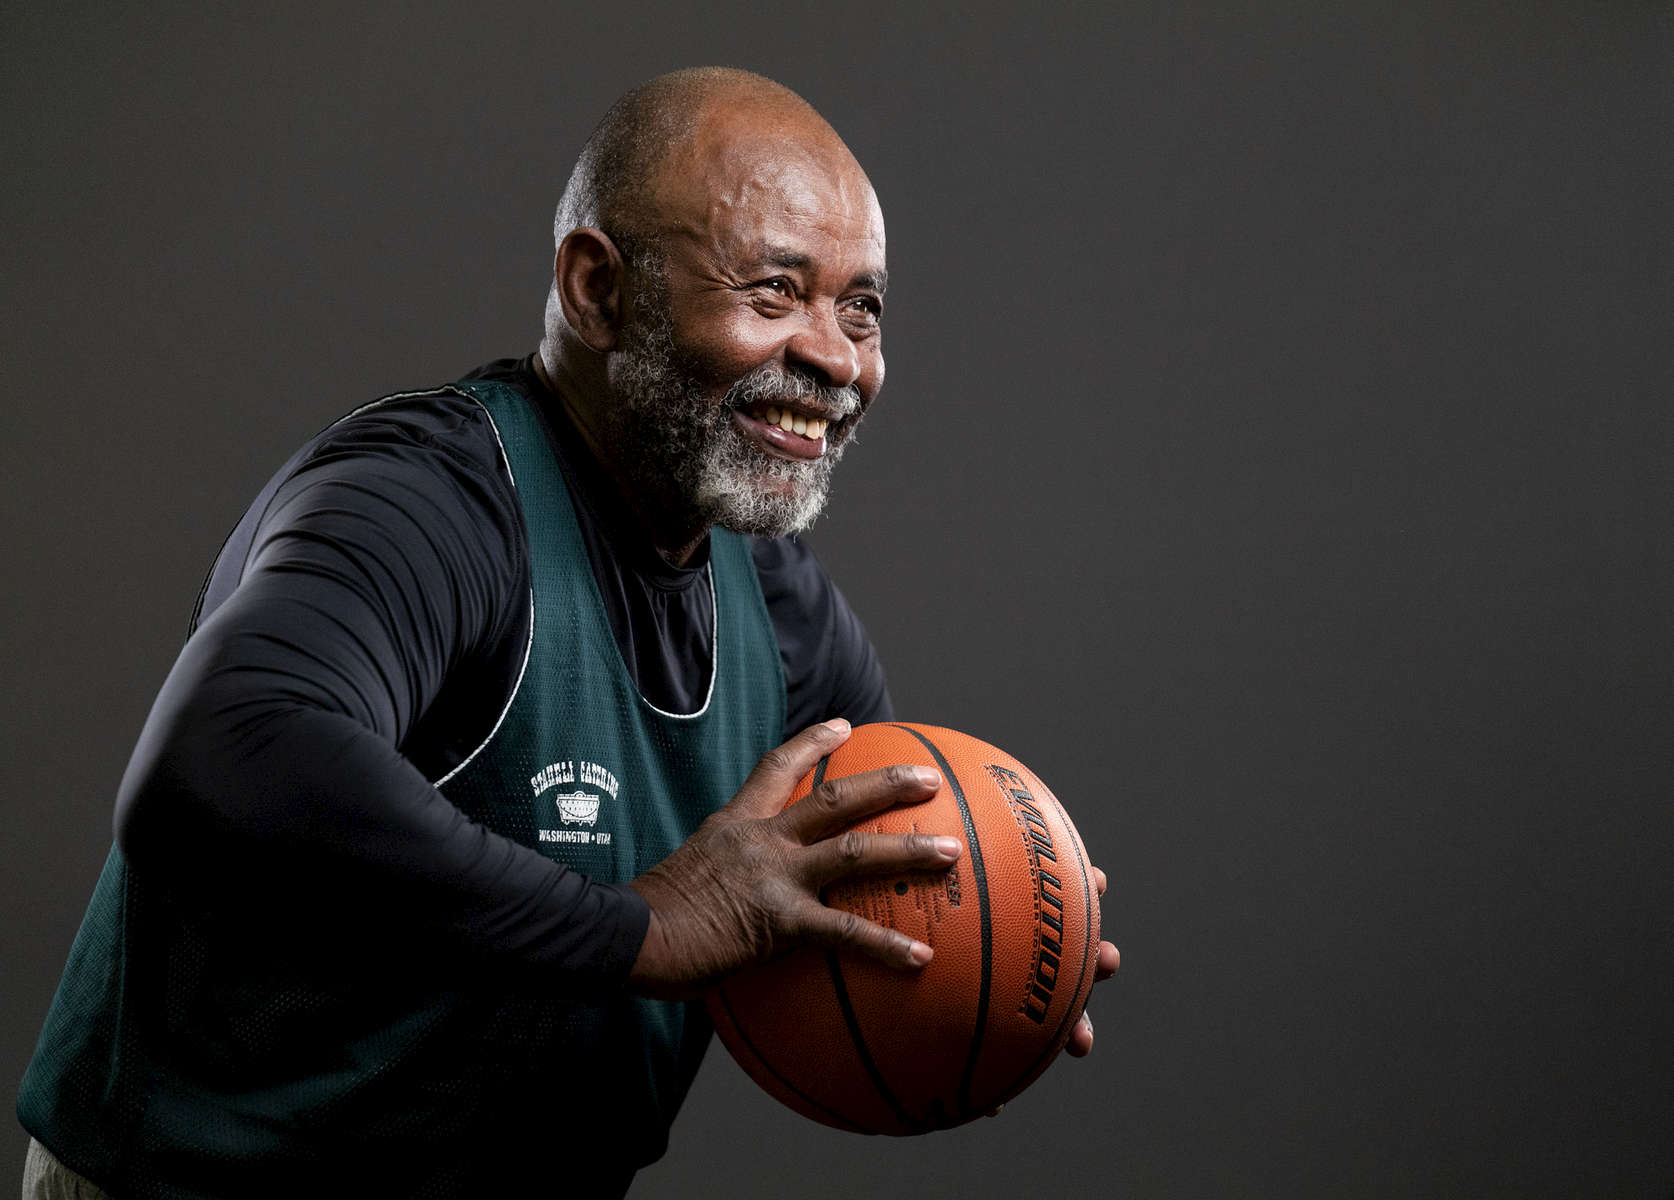 Senior basketball player Herb Ballard aged seventy six, poses for a portrait during the Huntsman World Senior Games on October 11, 2019 in St. George, Utah. 